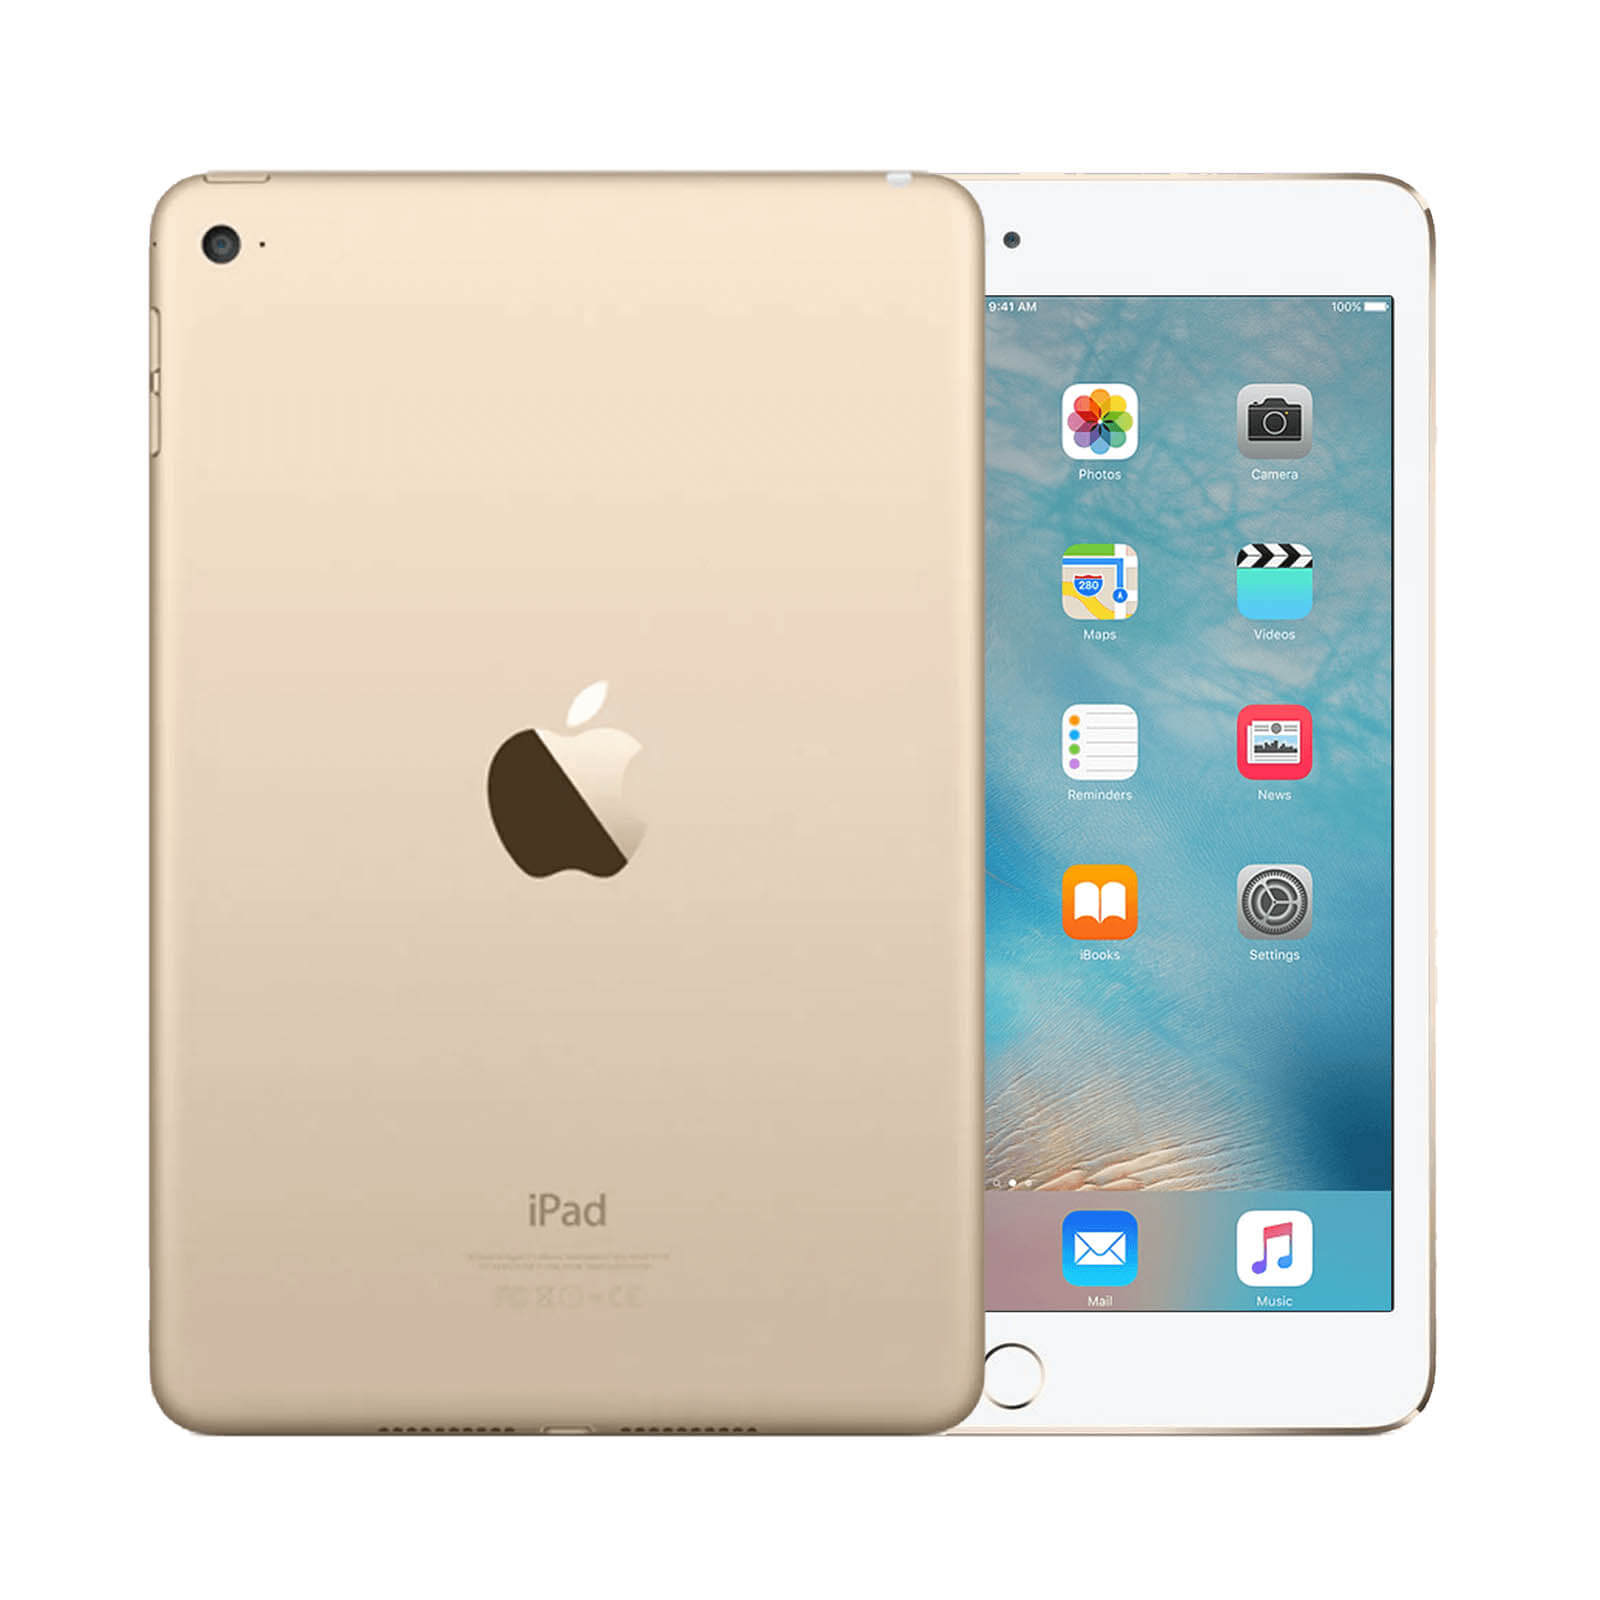 Apple iPad Mini 4 16GB Gold WiFi - Fair